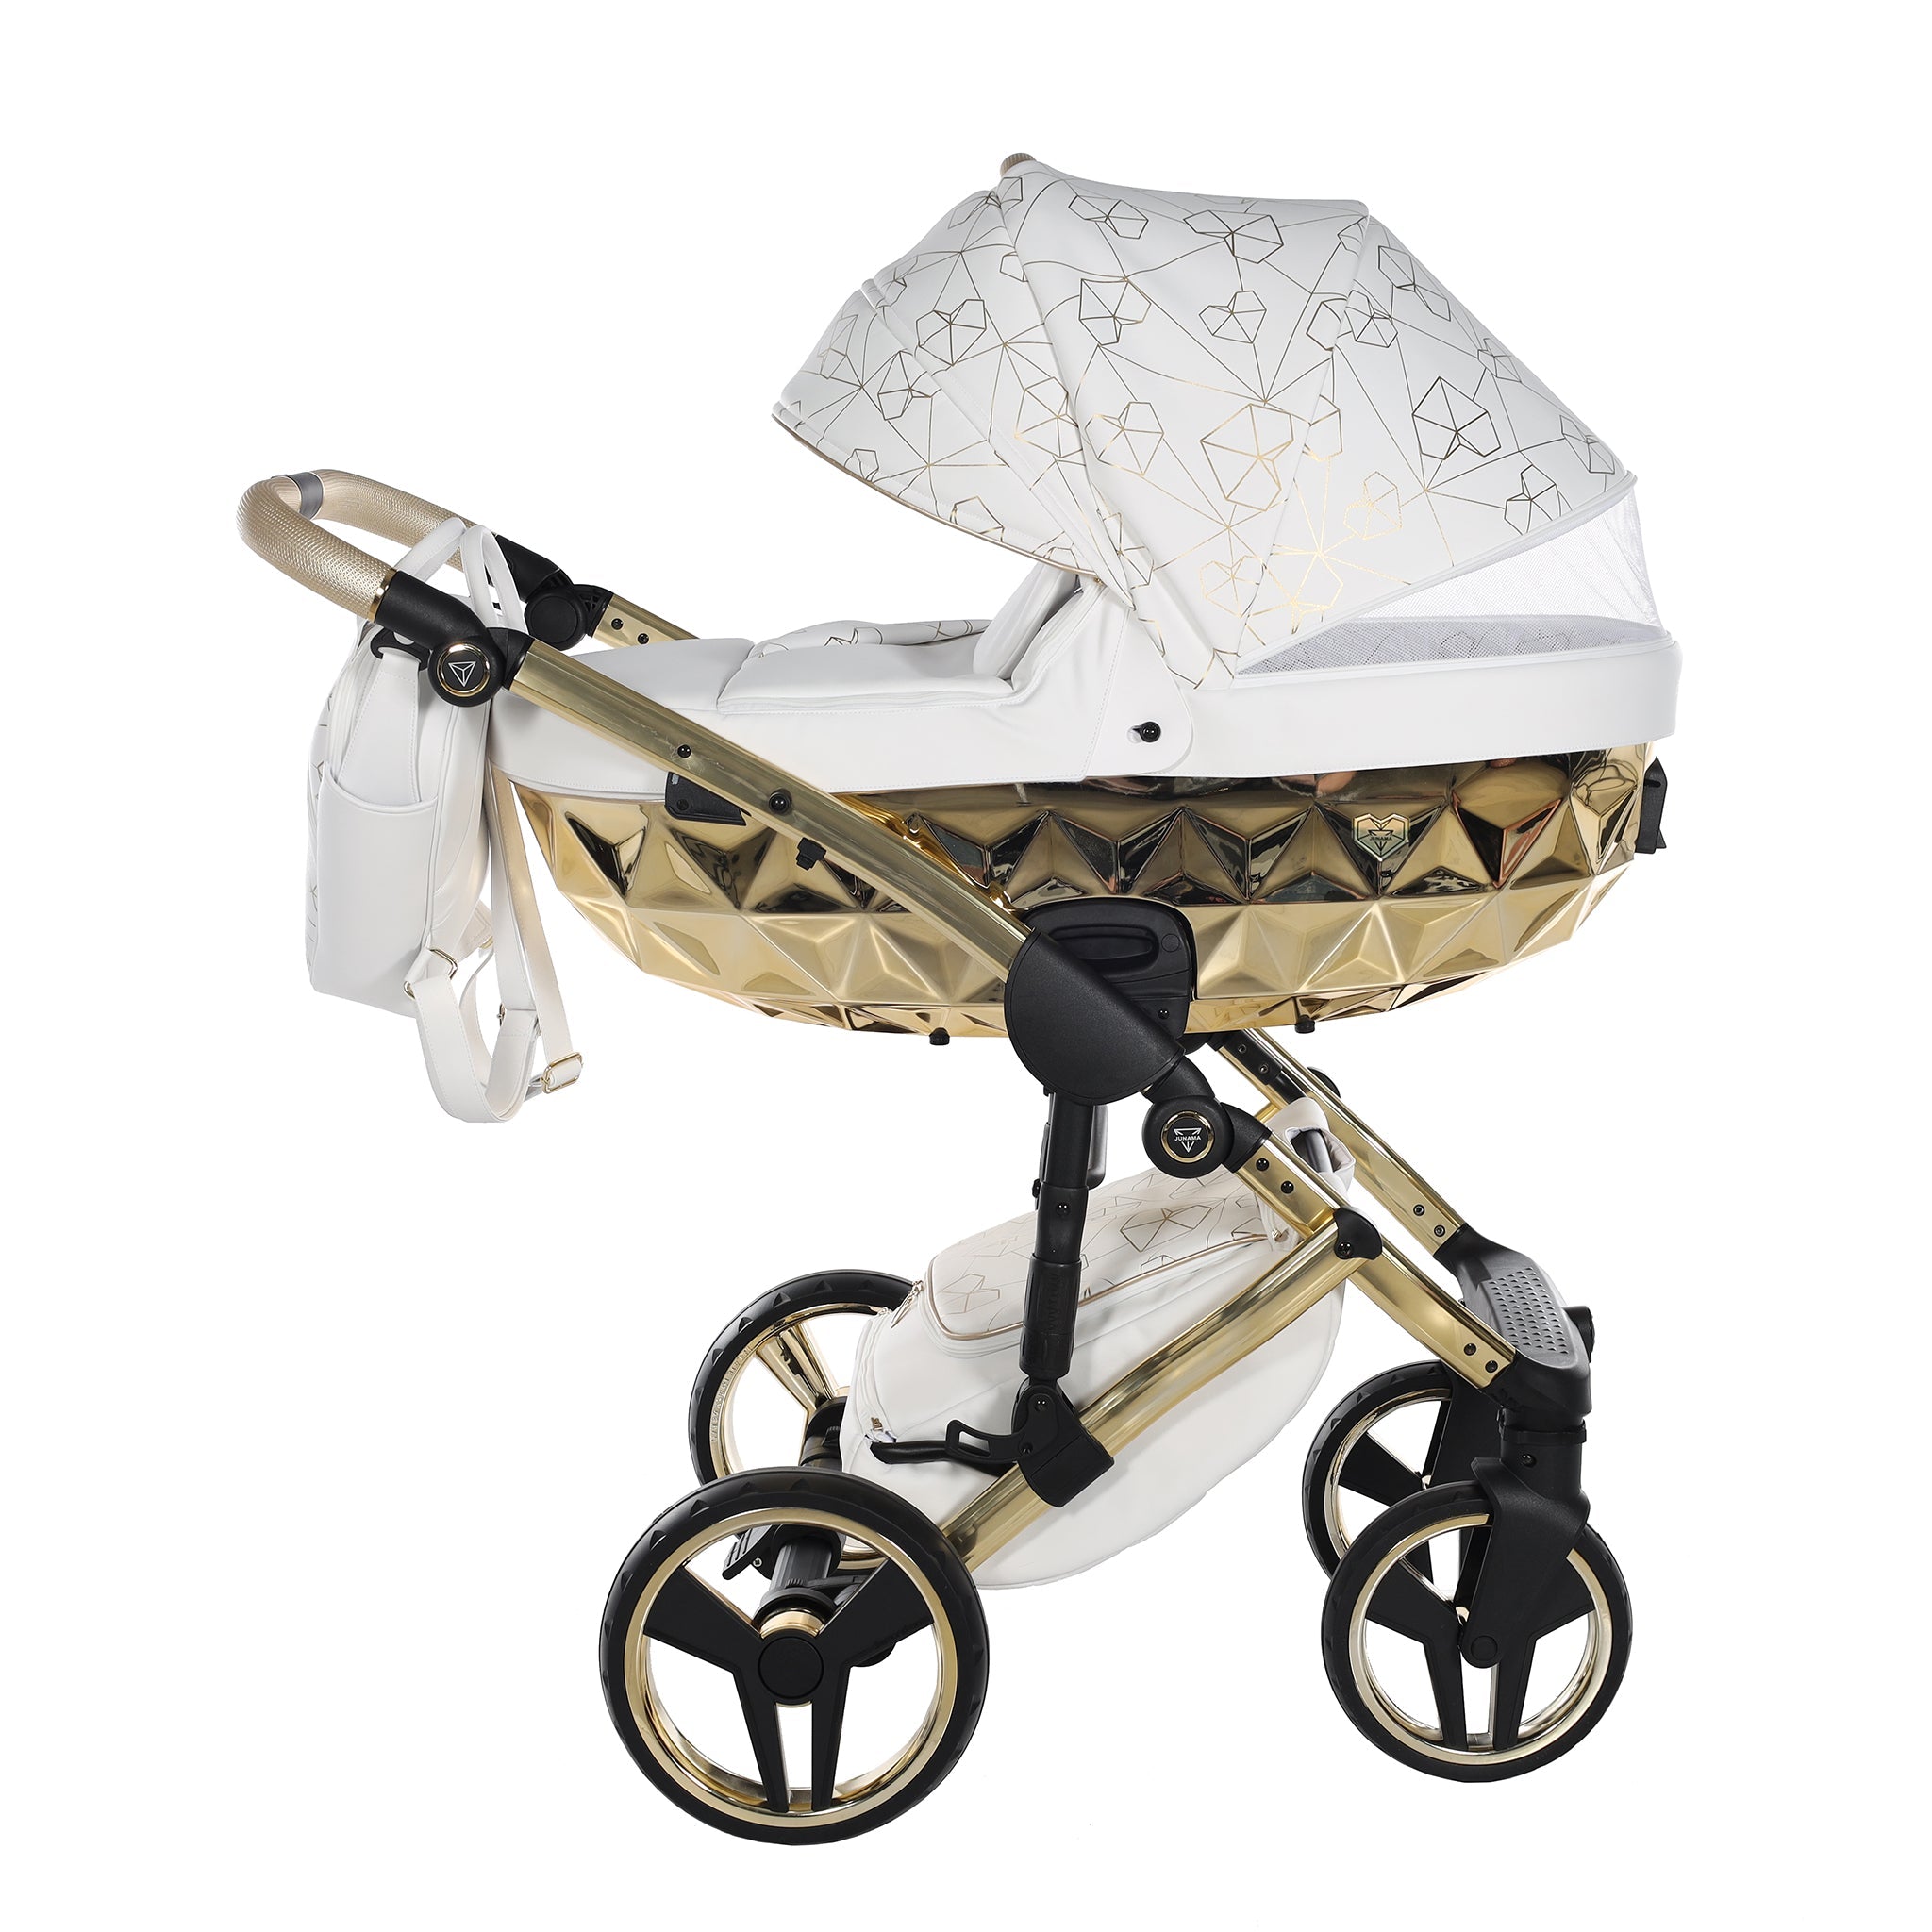 Junama Heart, baby prams or stroller 2 in 1 - White and Gold, Code number: JUNHERT01